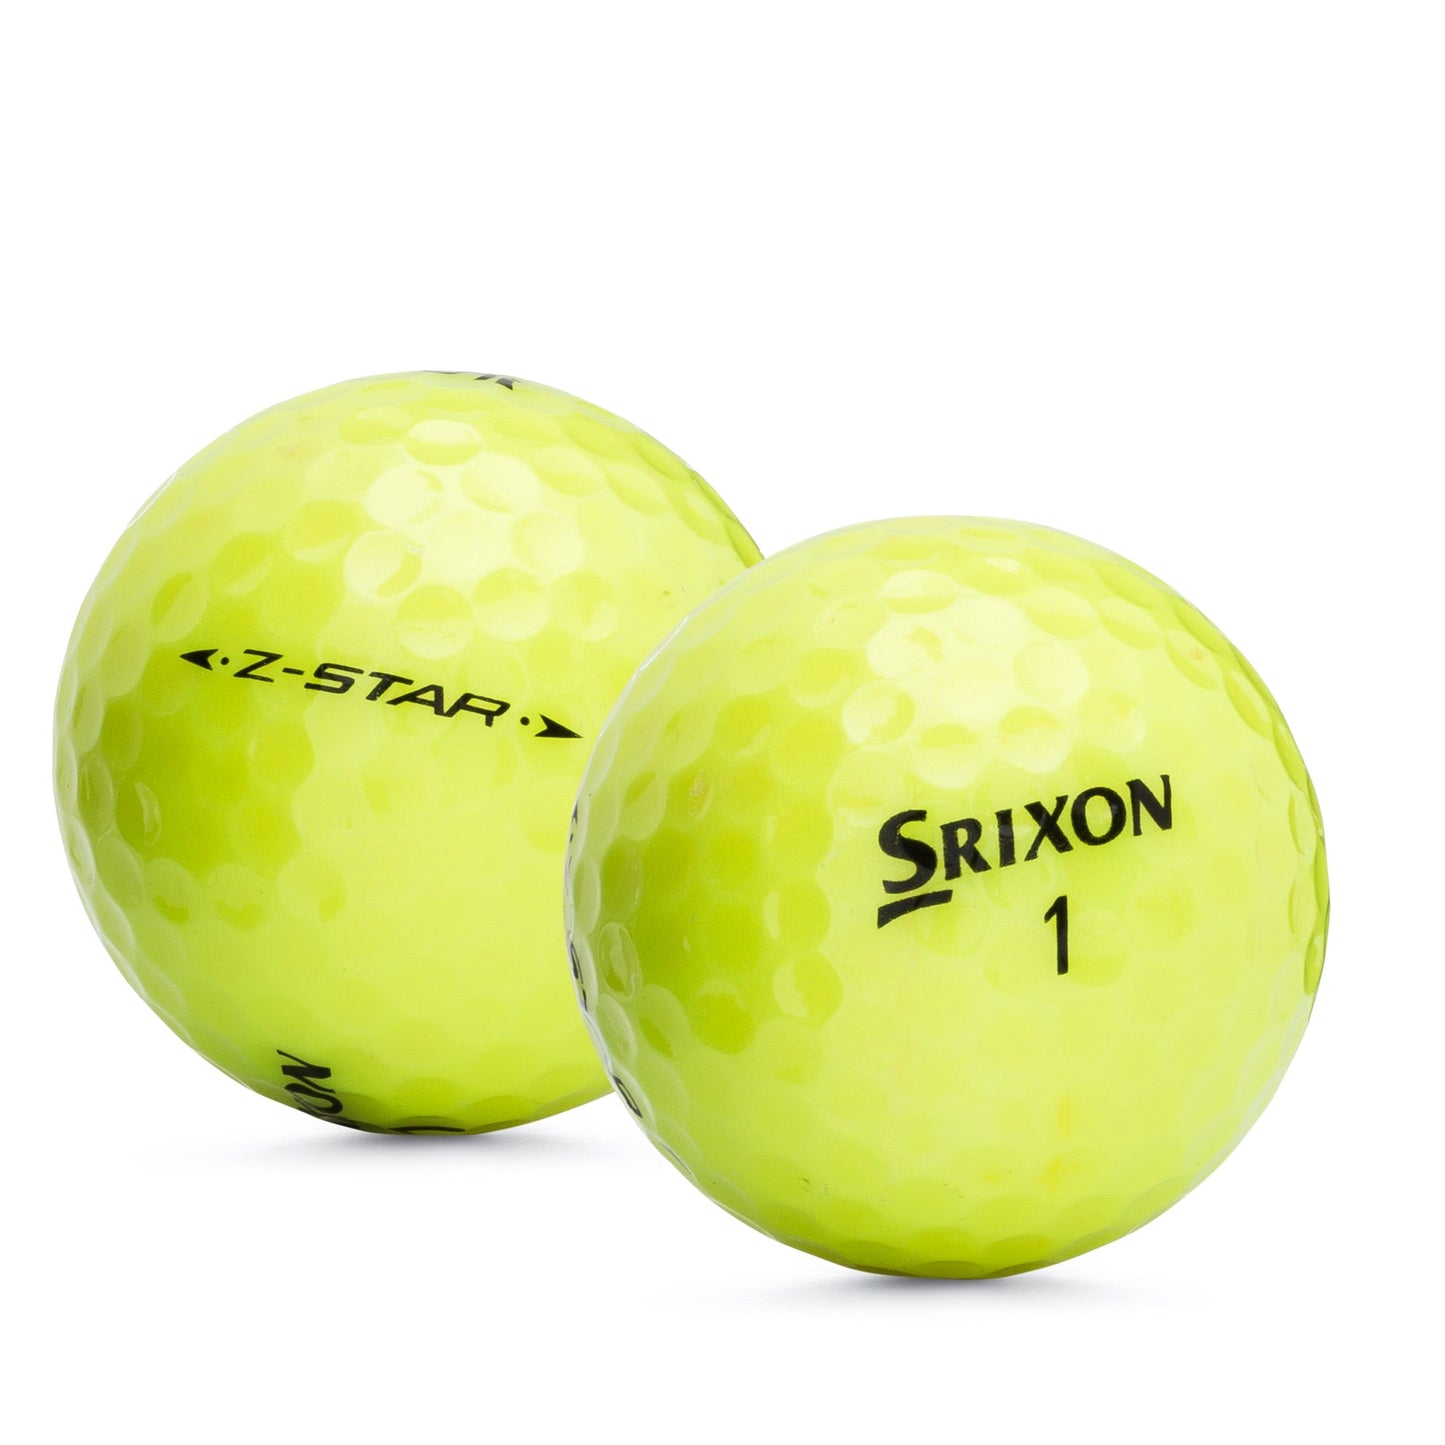 Used Srixon Z Series Pro Tour Yellow Models - 60 Golf Balls